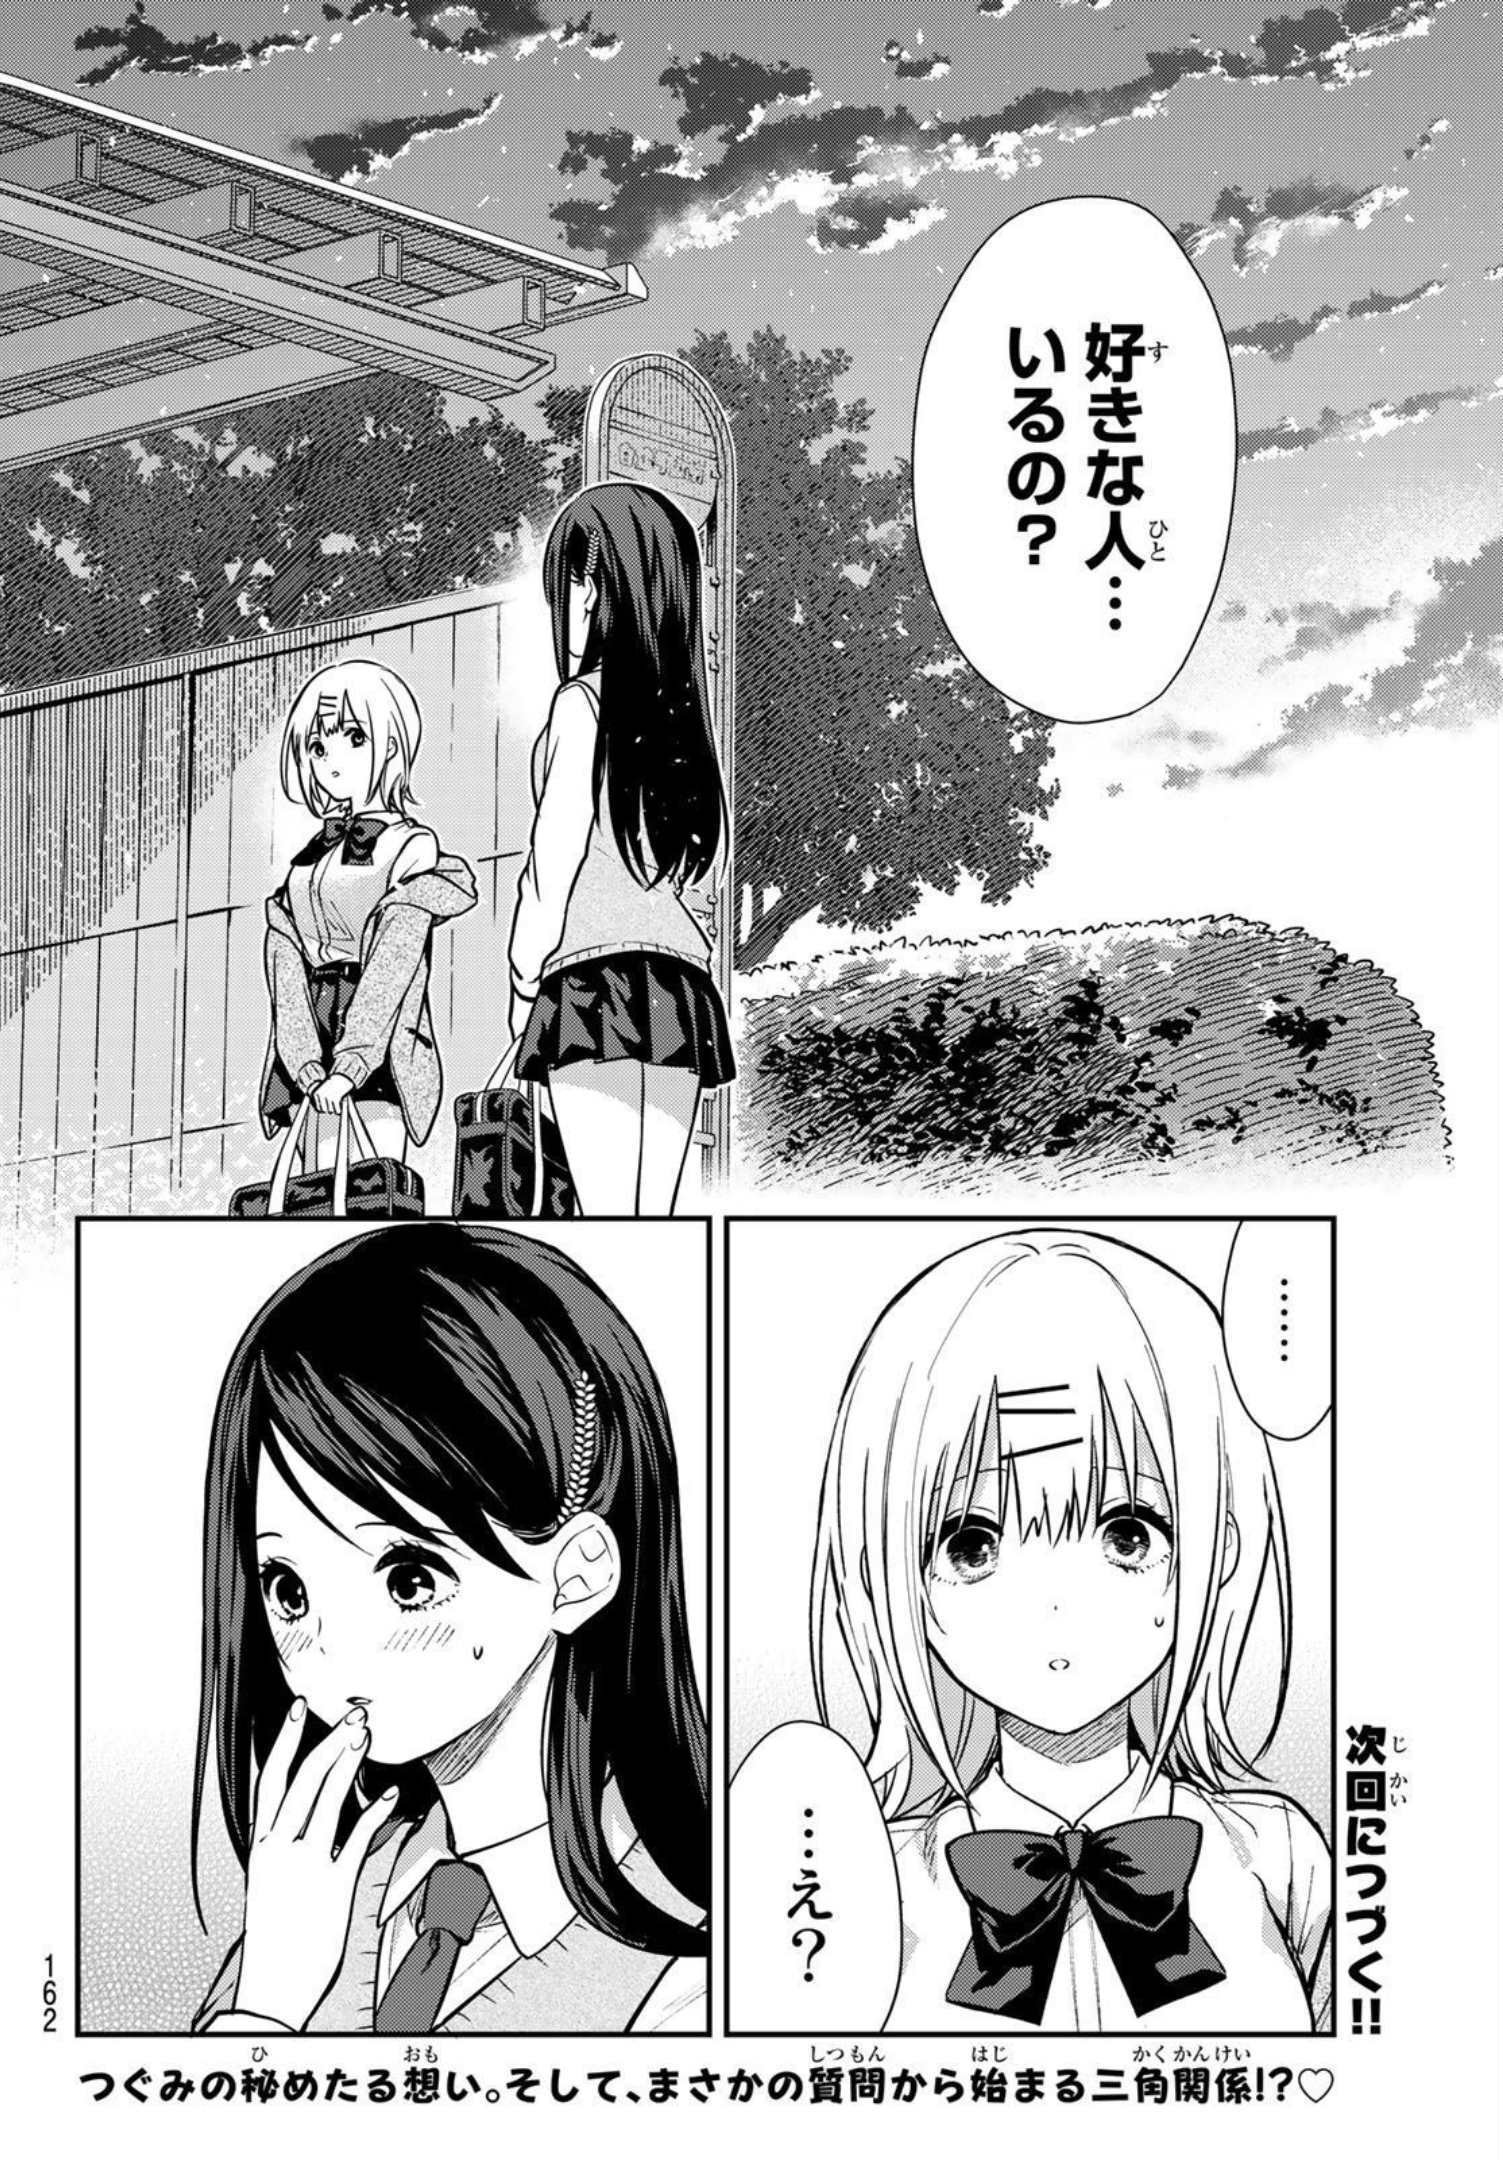 Kimi ga Megami Nara Ii no ni (I Wish You Were My Muse) - Chapter 003 - Page 28